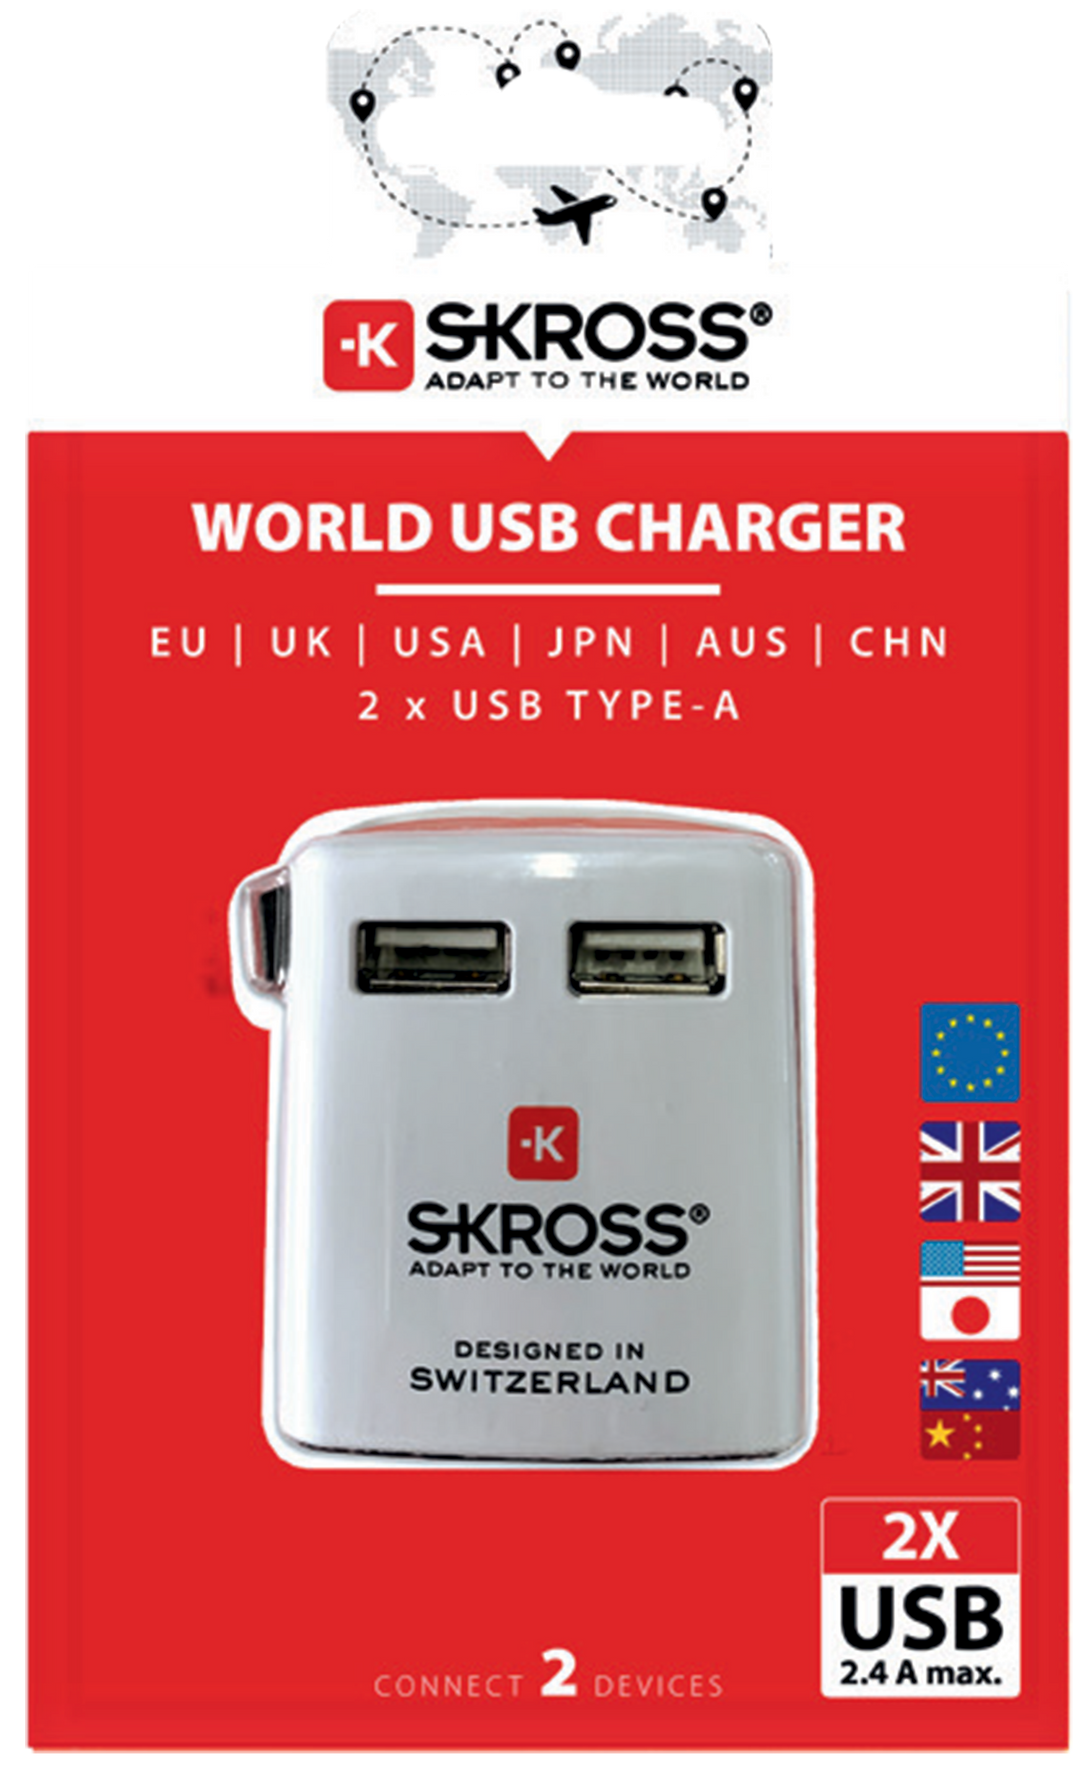 Skross World USB Charger Packaging